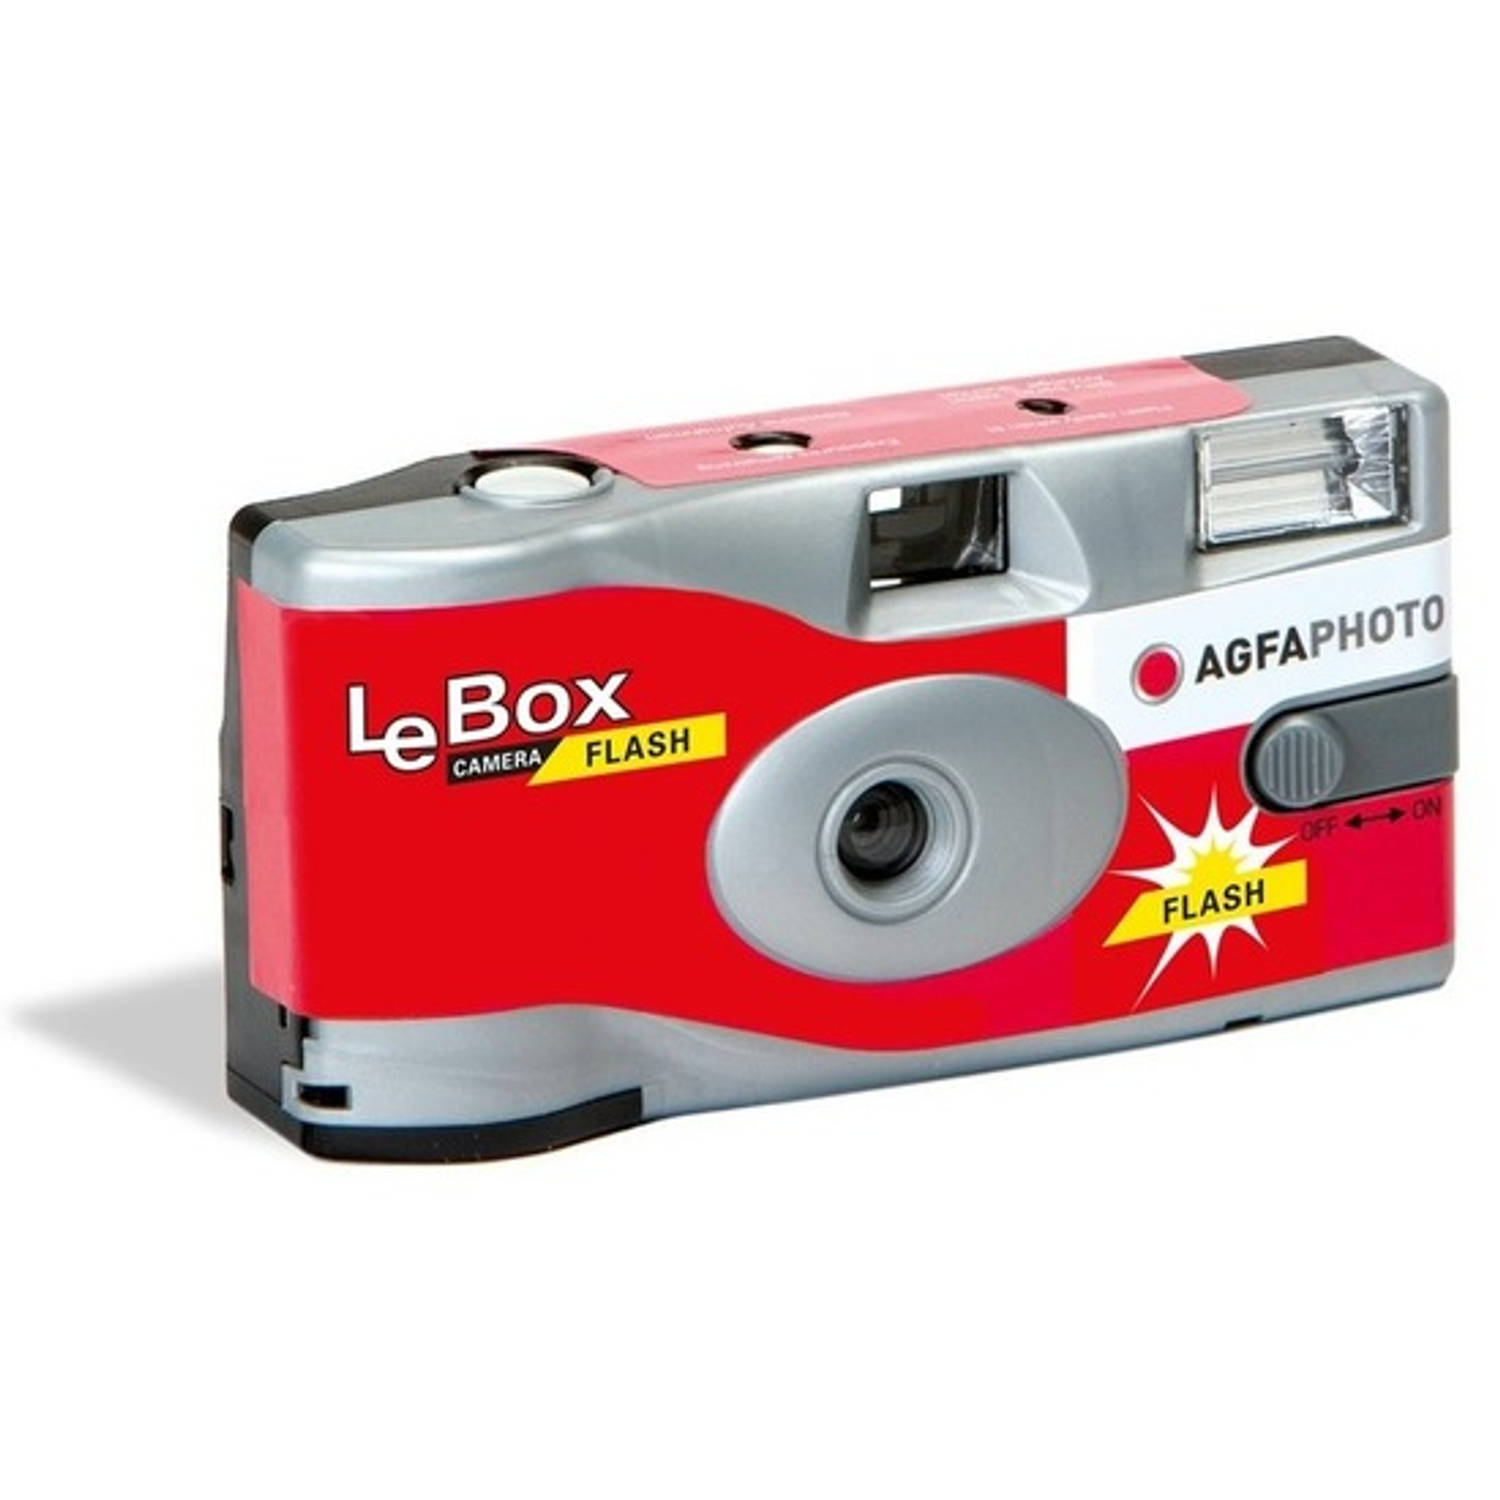 3x Bruiloft-vrijgezellenfeest wegwerp camera 27 kleuren fotos met flits Weggooi fototoestel-cameras